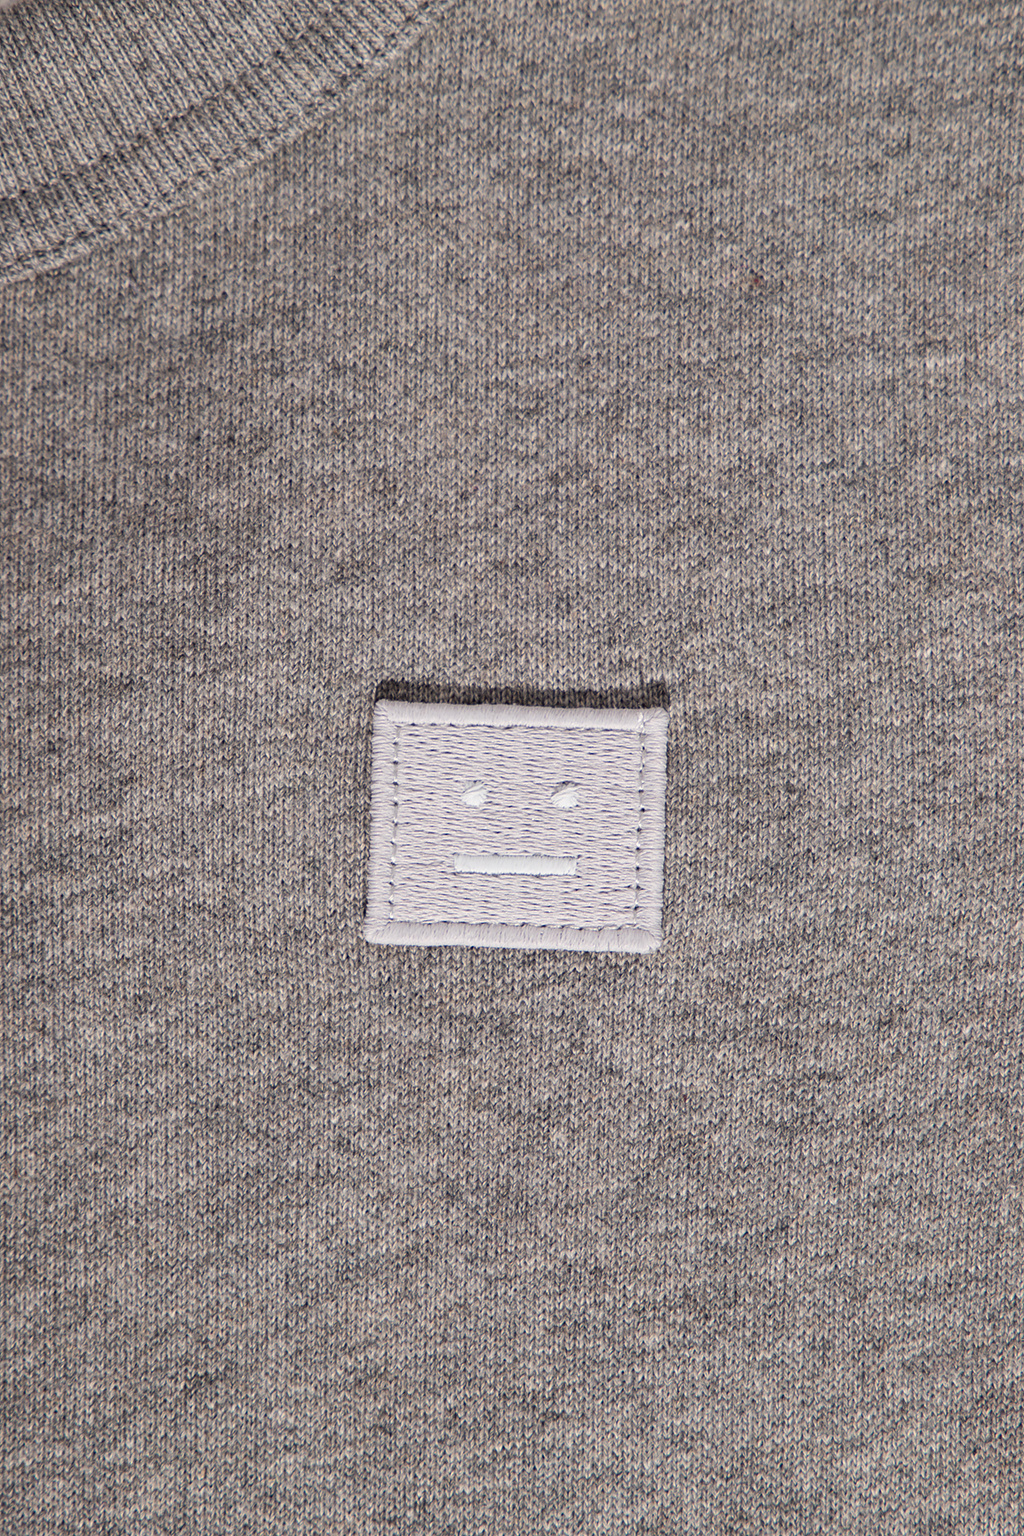 Crew Clothing Company Blue Slim Chino Sweatshirt with logo